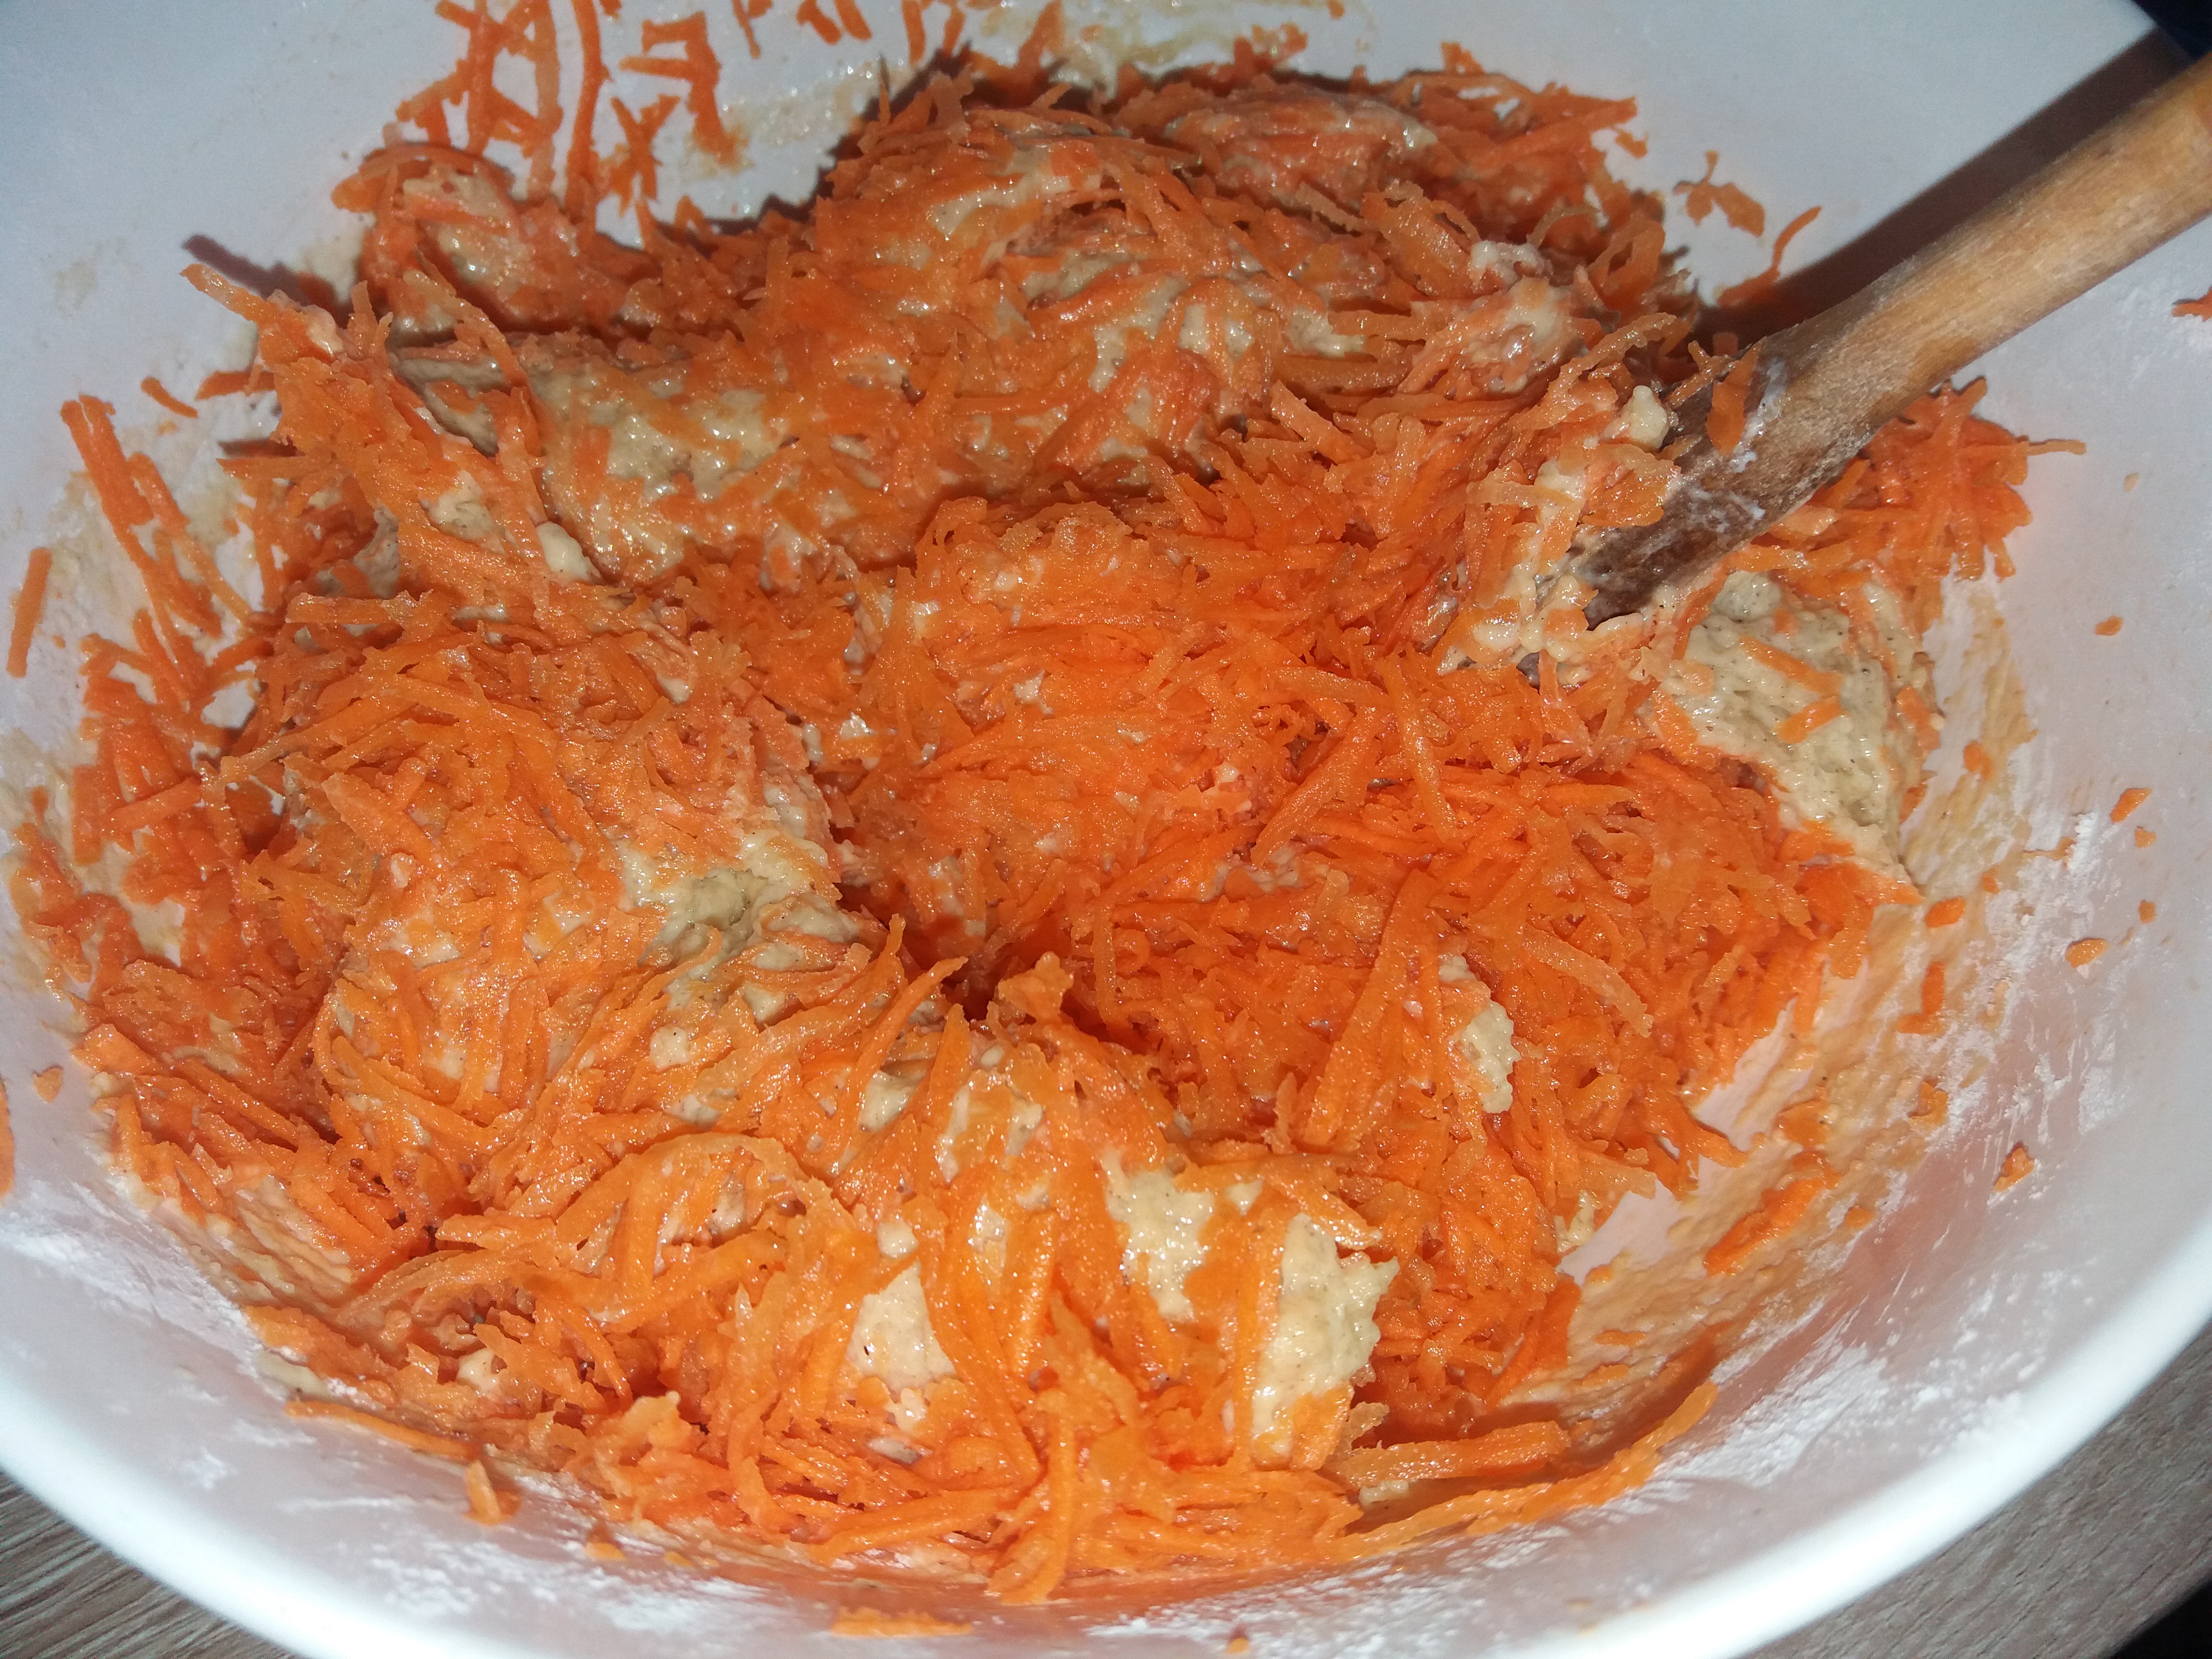 Desert prajitura cu morcovi fara zahar